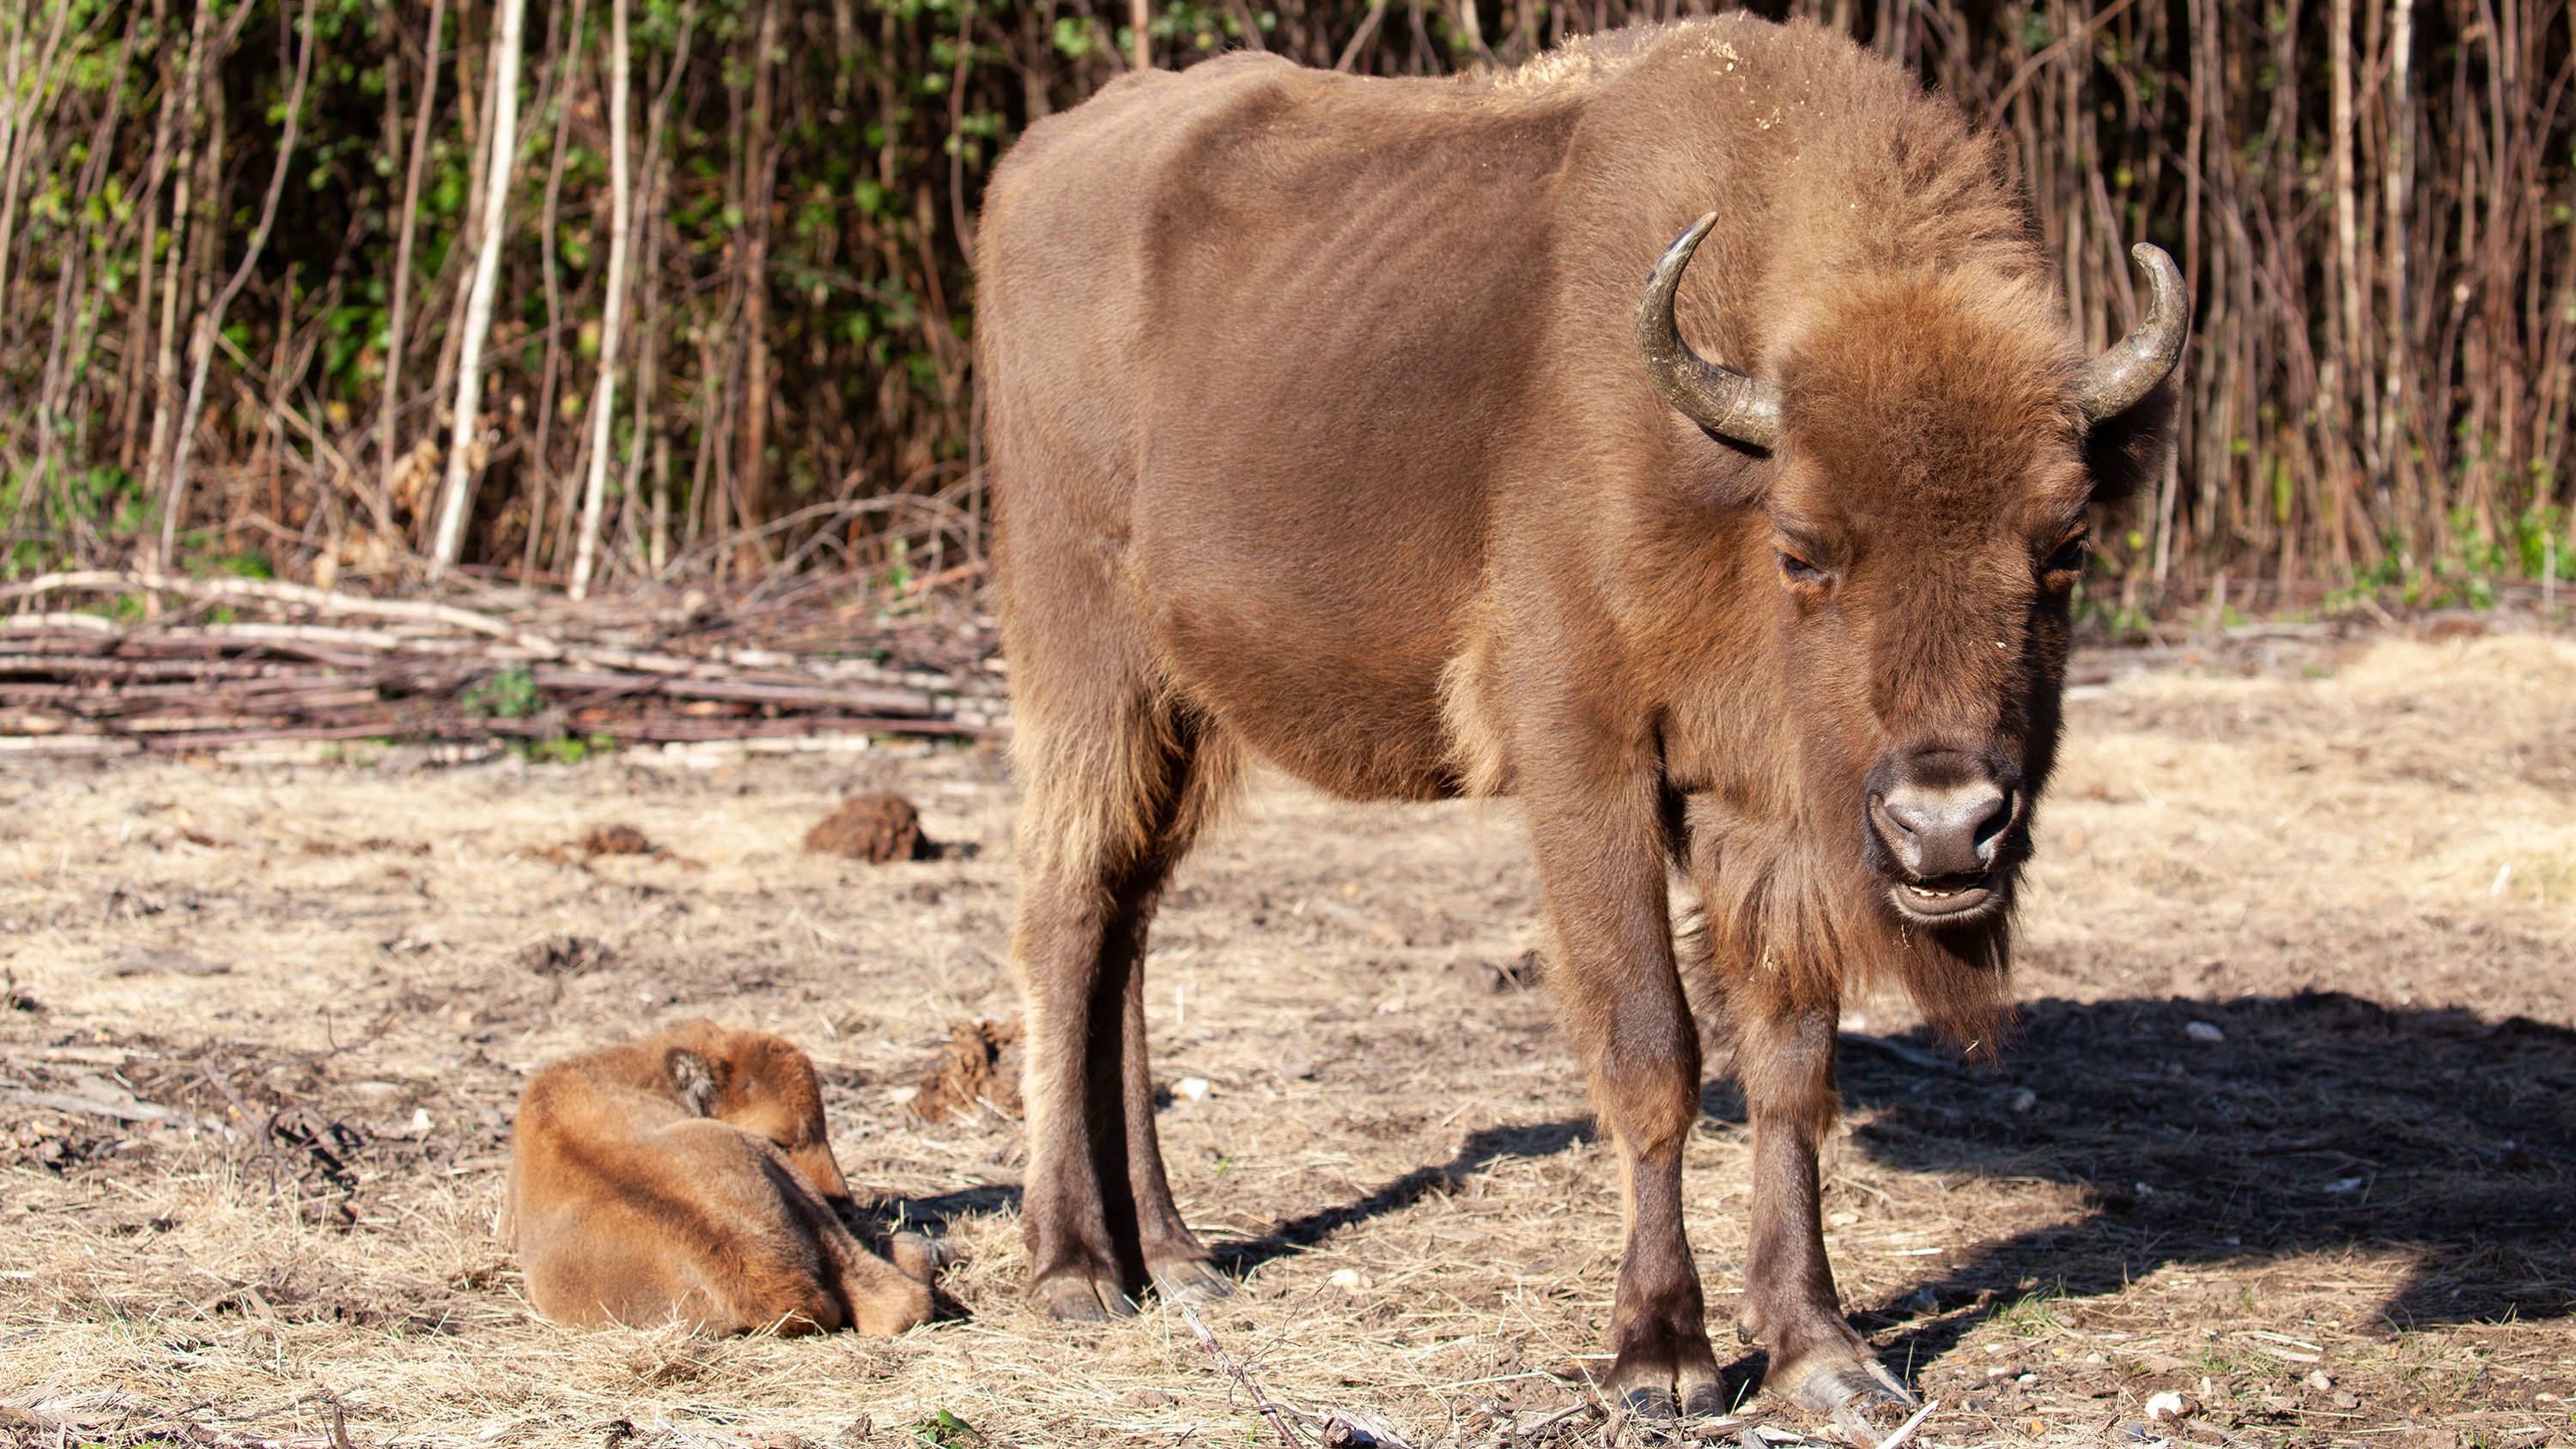 The first baby bison has been born in UK 'rewilding' program | CNN